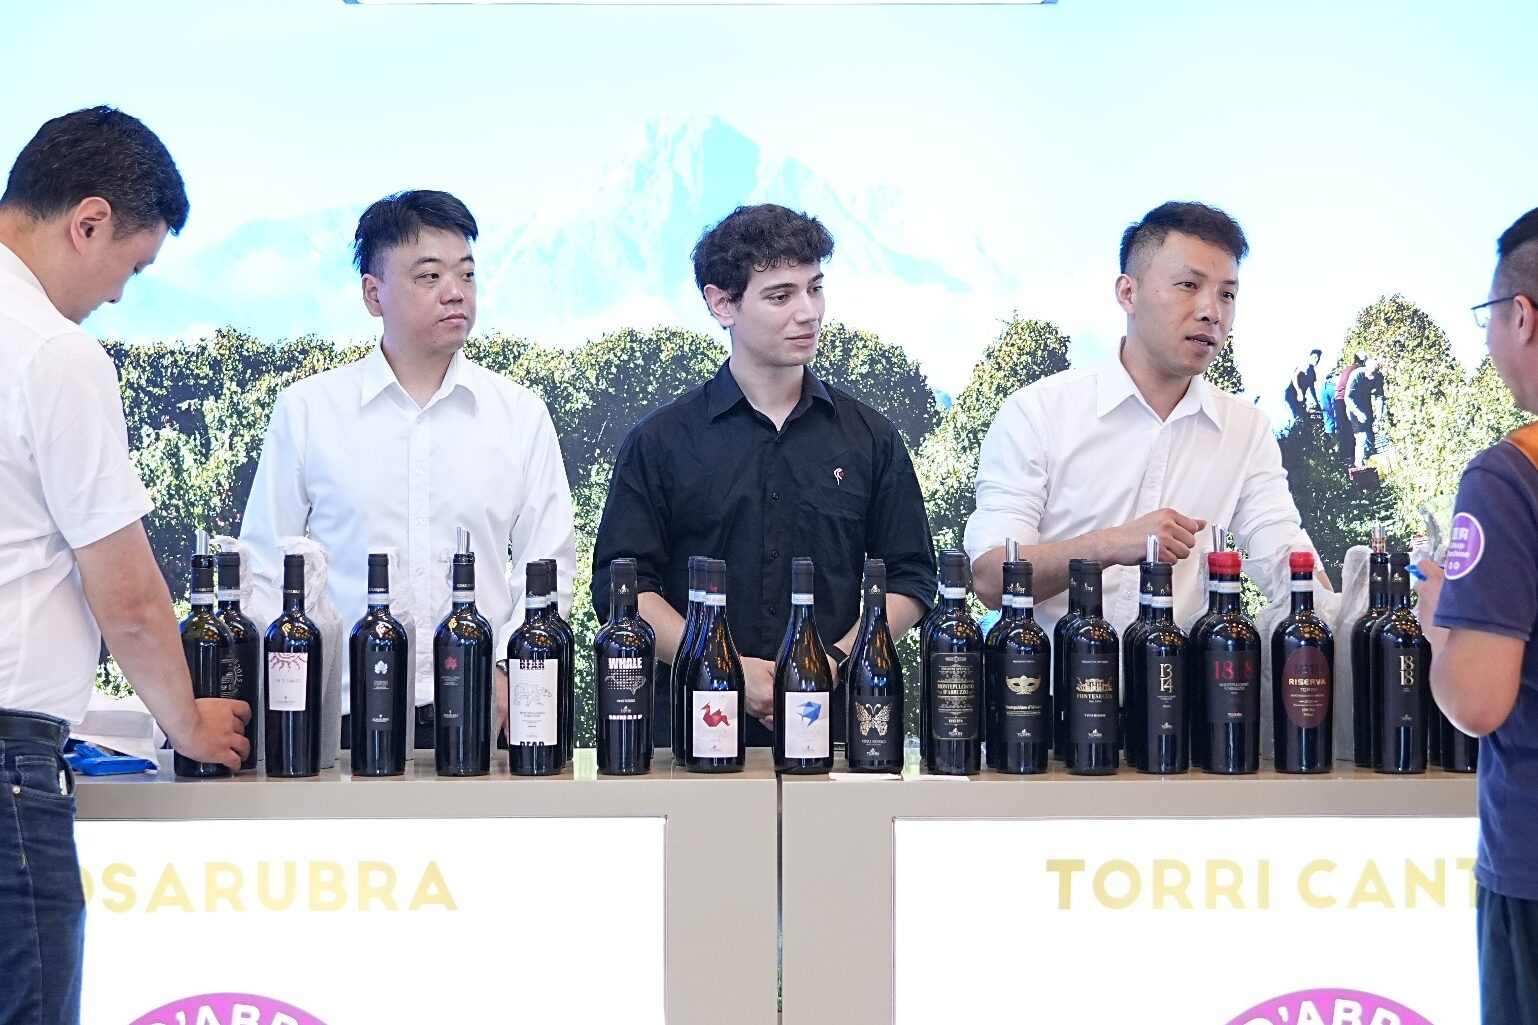 Rosarubra e Torri Cantine a Chengdu in Cina per il tour dei Vini d'Abruzzo insieme a Wine Channel 